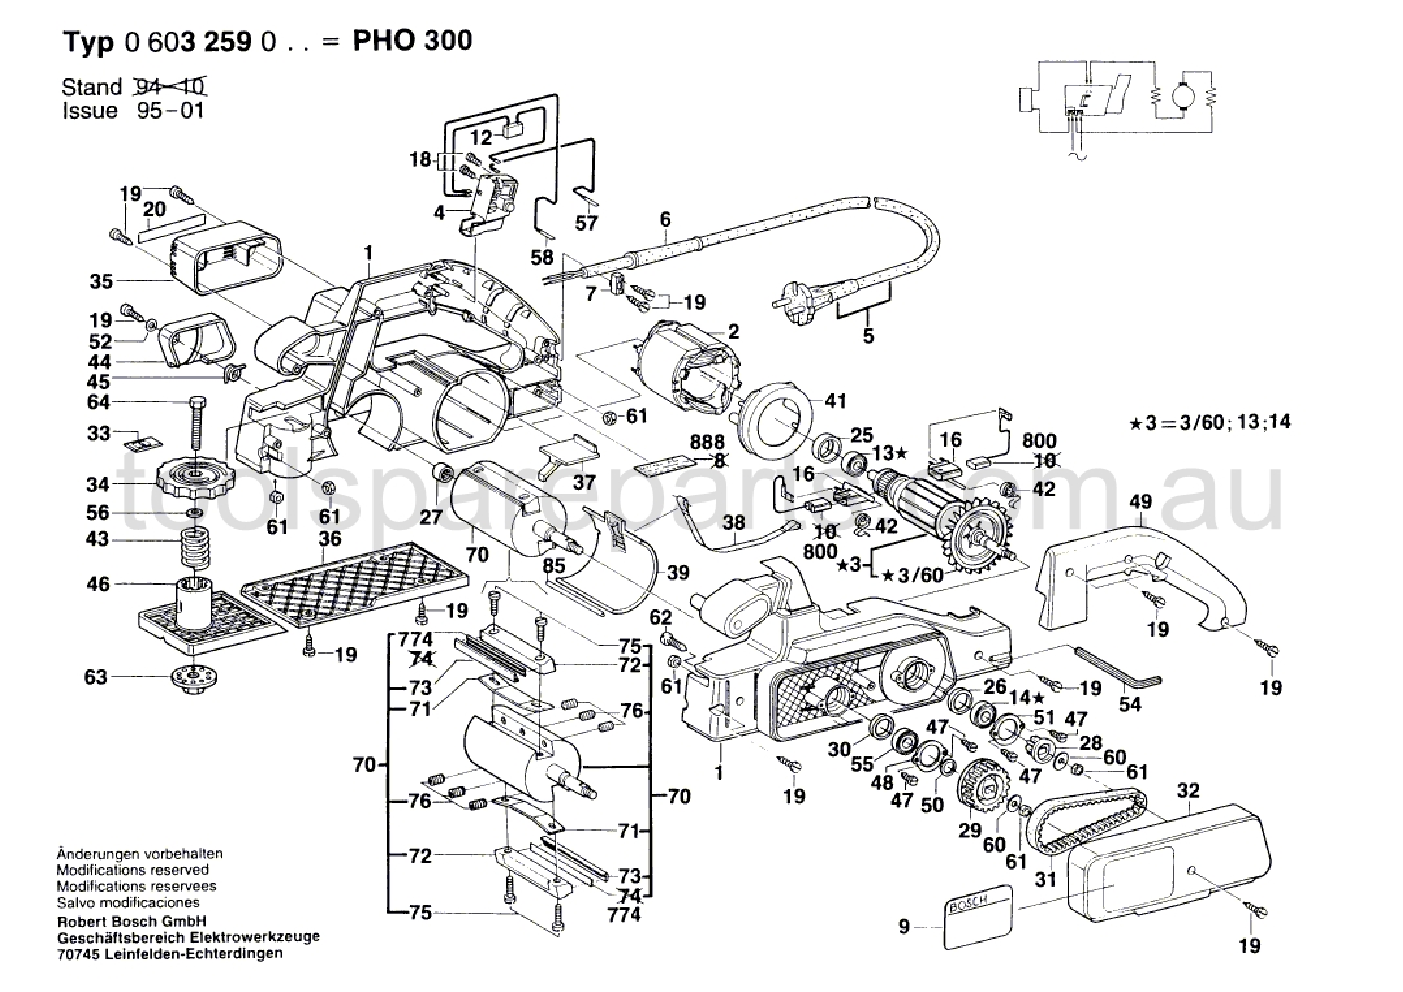 Bosch PHO 300 0603259037  Diagram 1